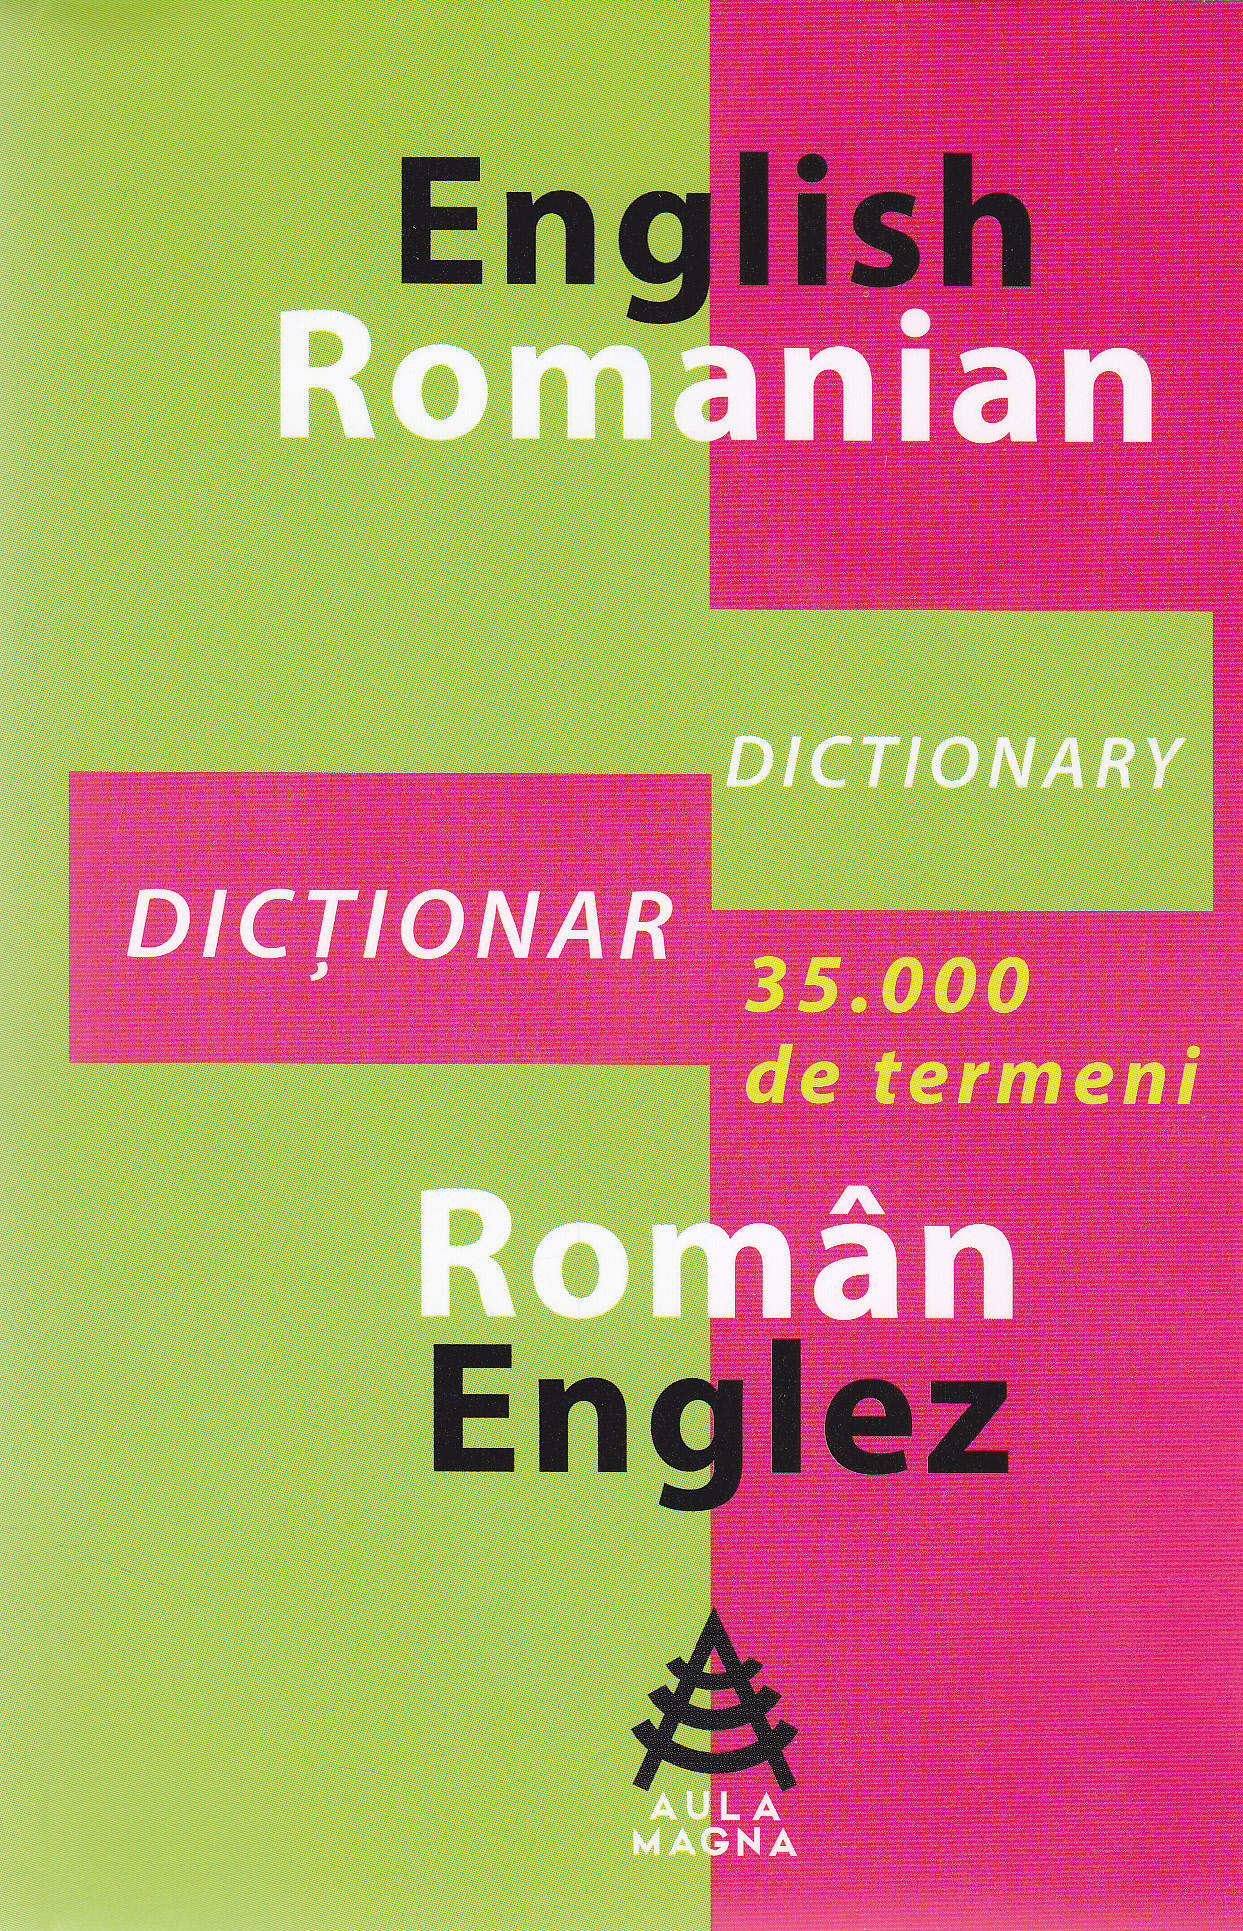 Dictionar englez- roman, roman- englez - 35000 de termeni - Dana Carausu